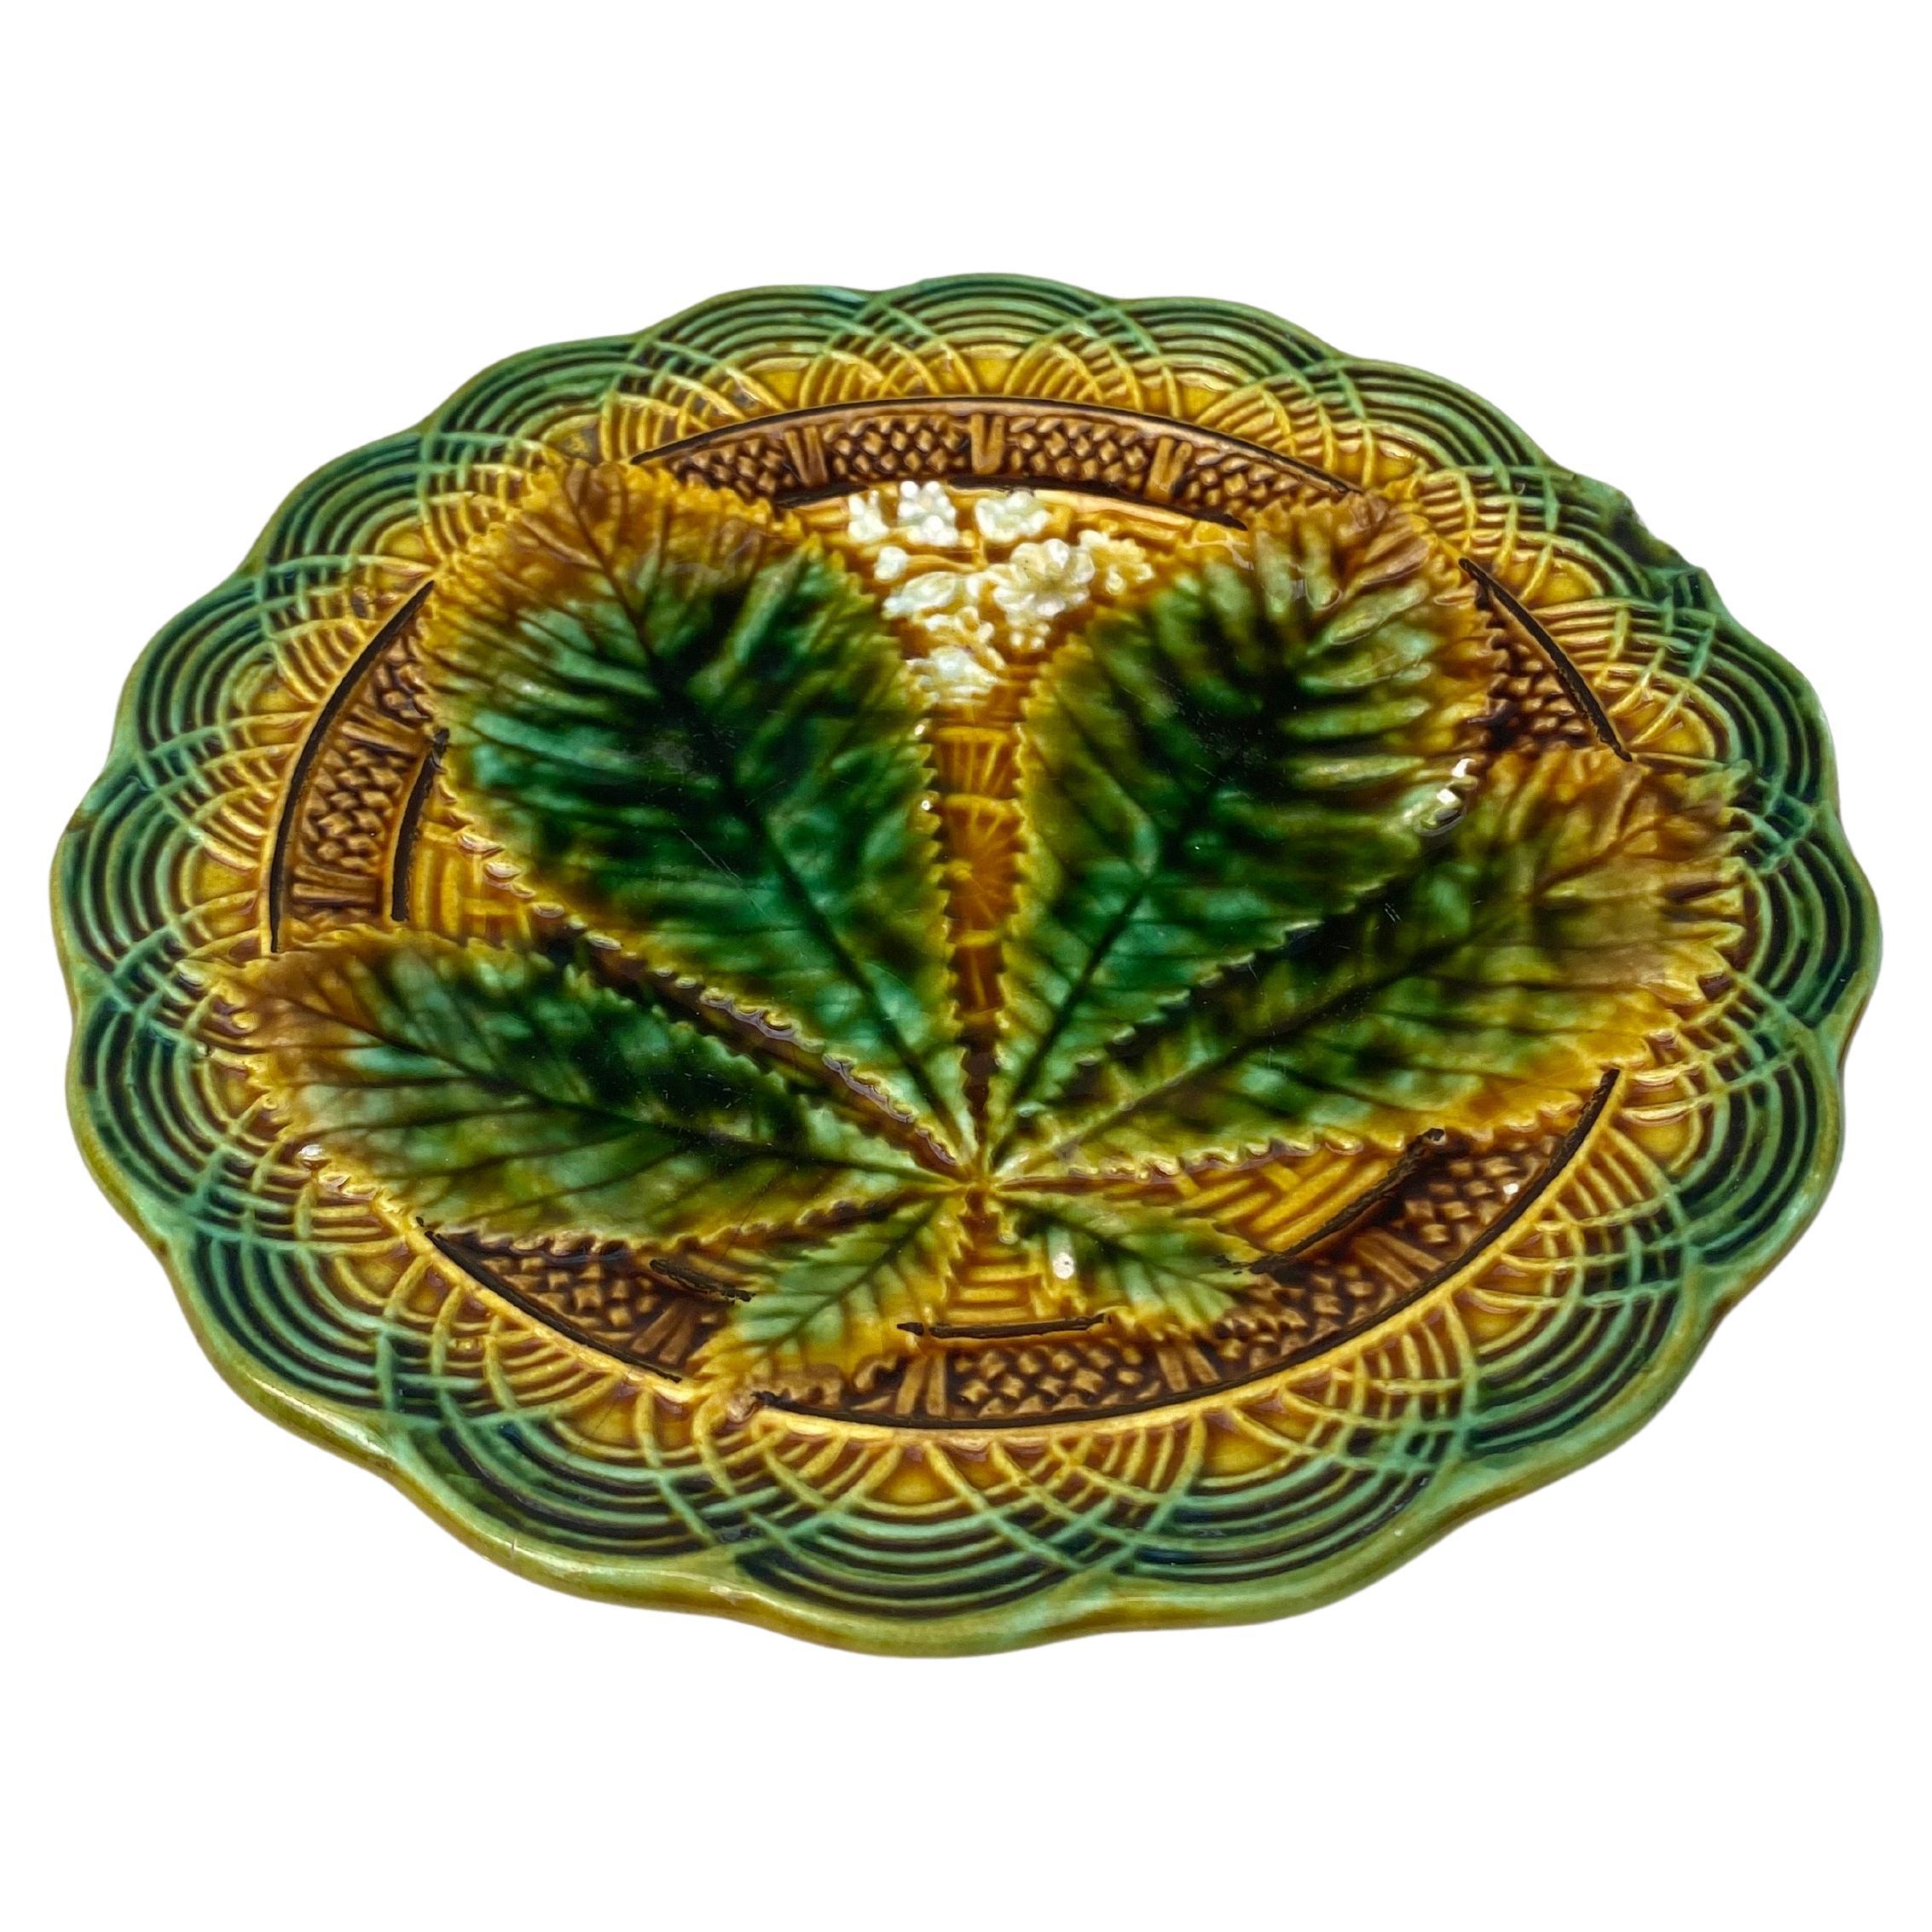 French Majolica chesnut leaf plate signed Villeroy & Boch, circa 1890.